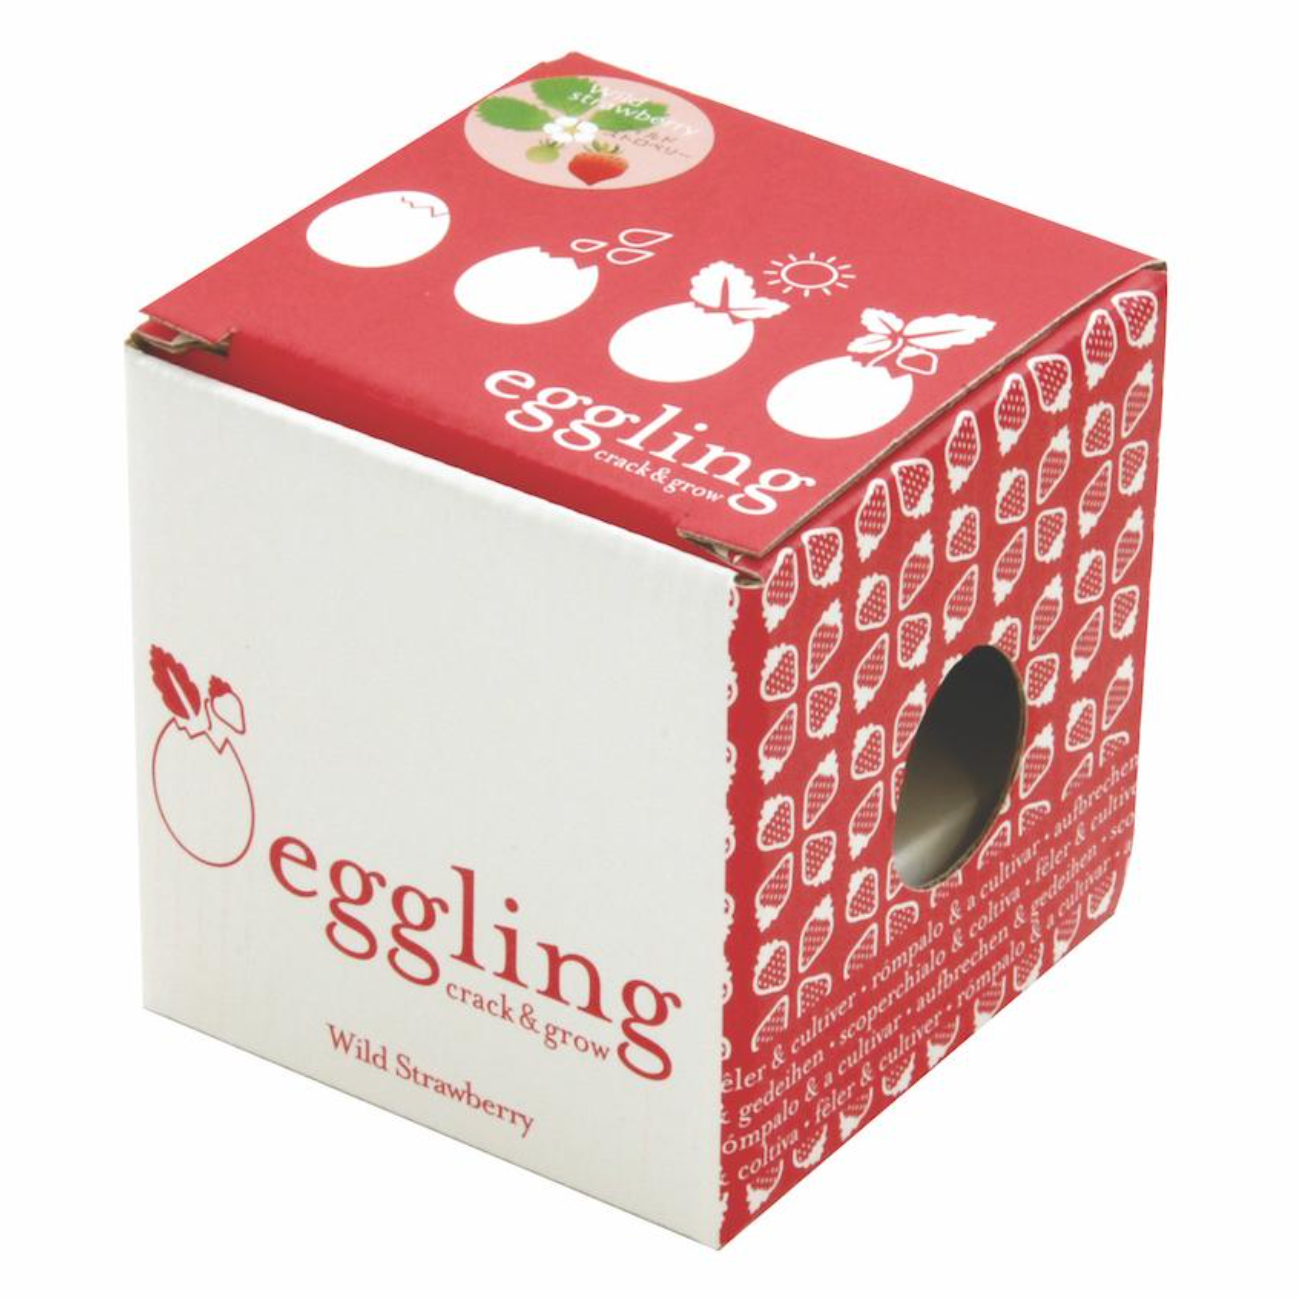 Eggling Crack & Grow - Strawberry